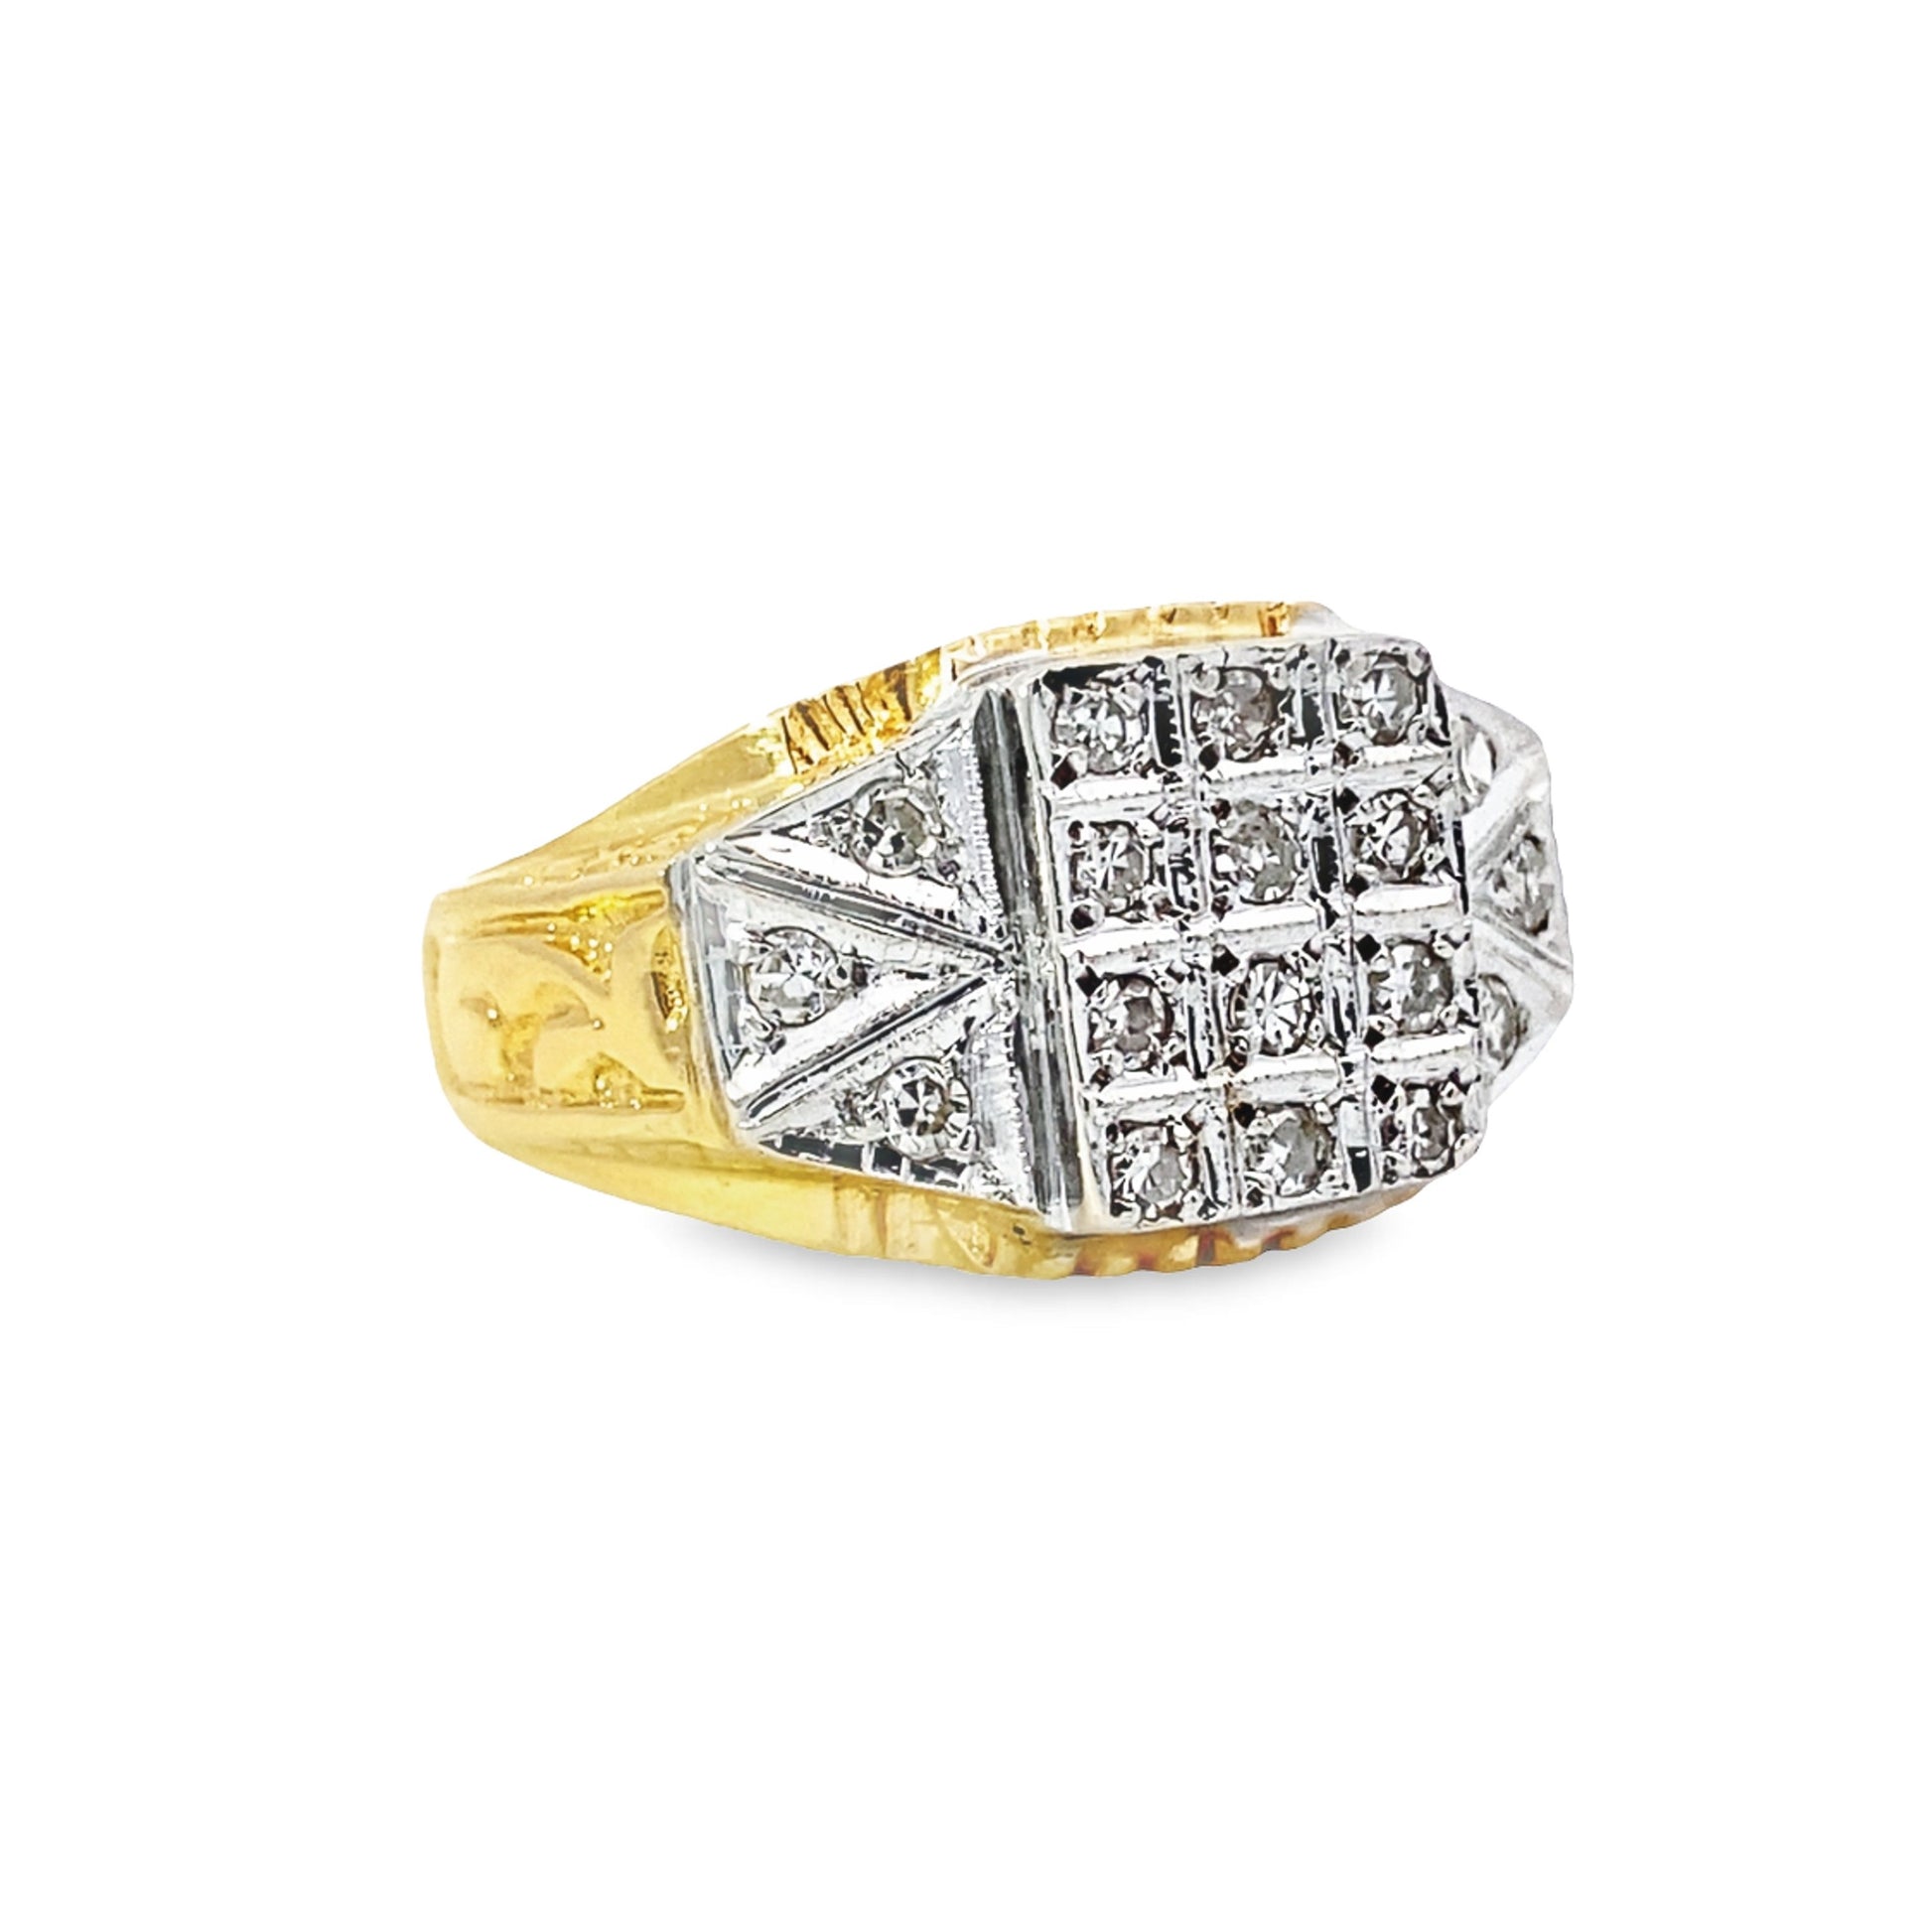 14K Two Tone Mens Diamond Fashion Ring Size 10 7.2Dwt